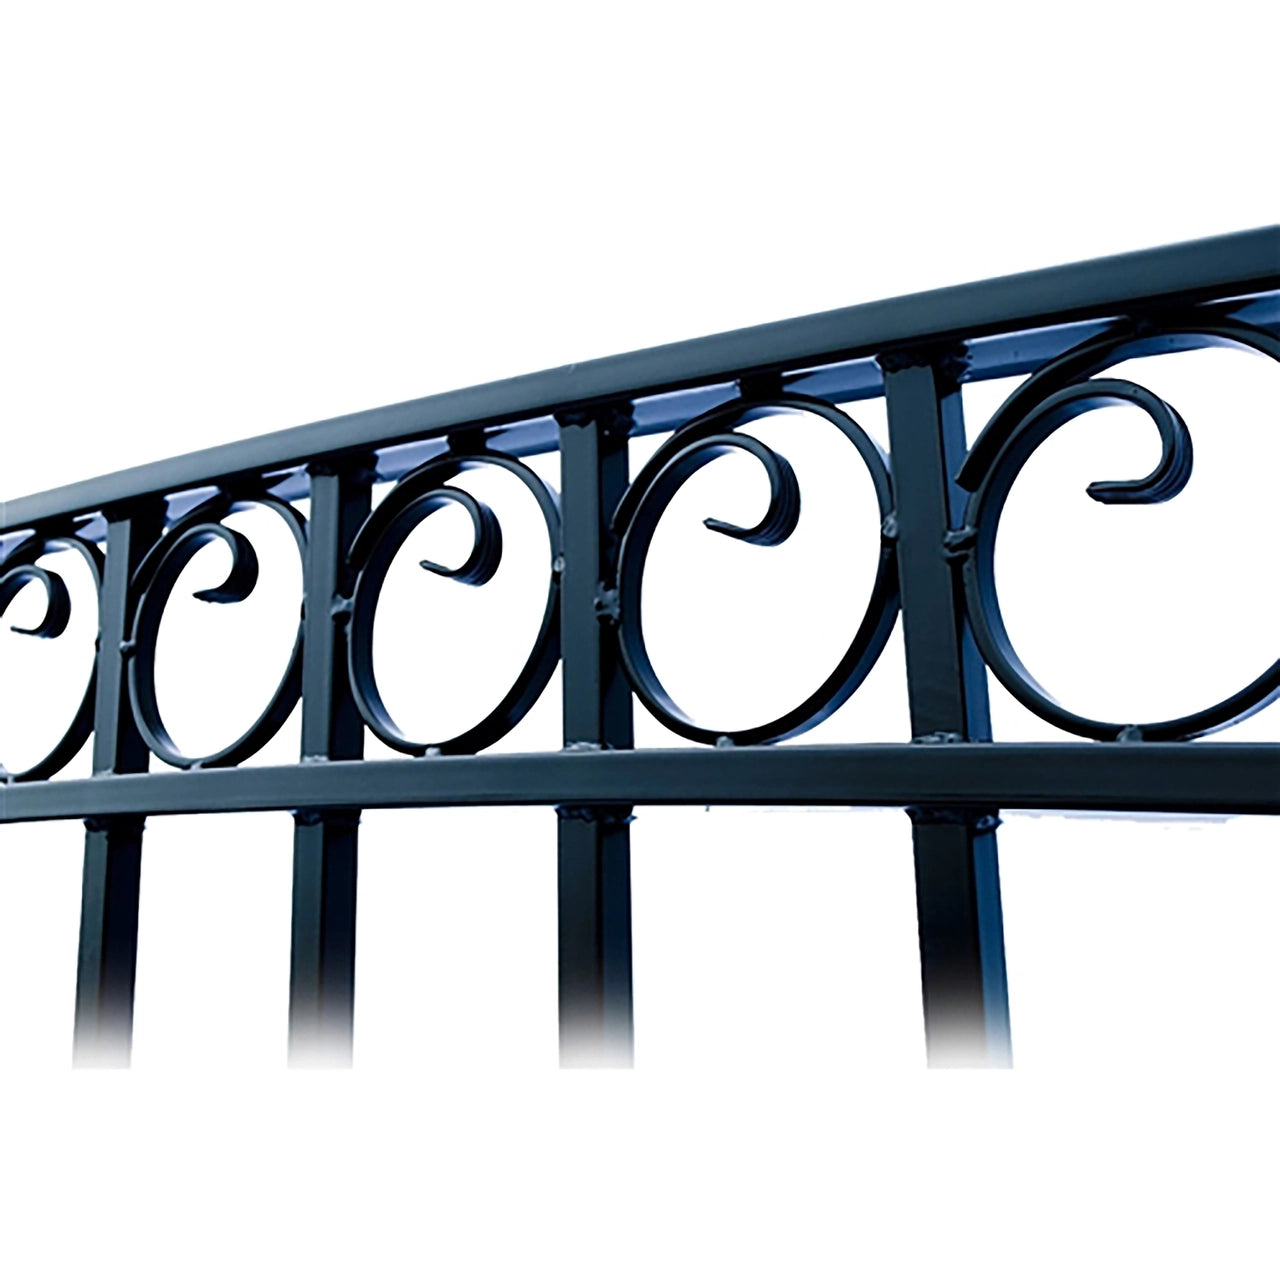 Aleko Steel Dual Swing Driveway Gate - PARIS Style - 12 ft